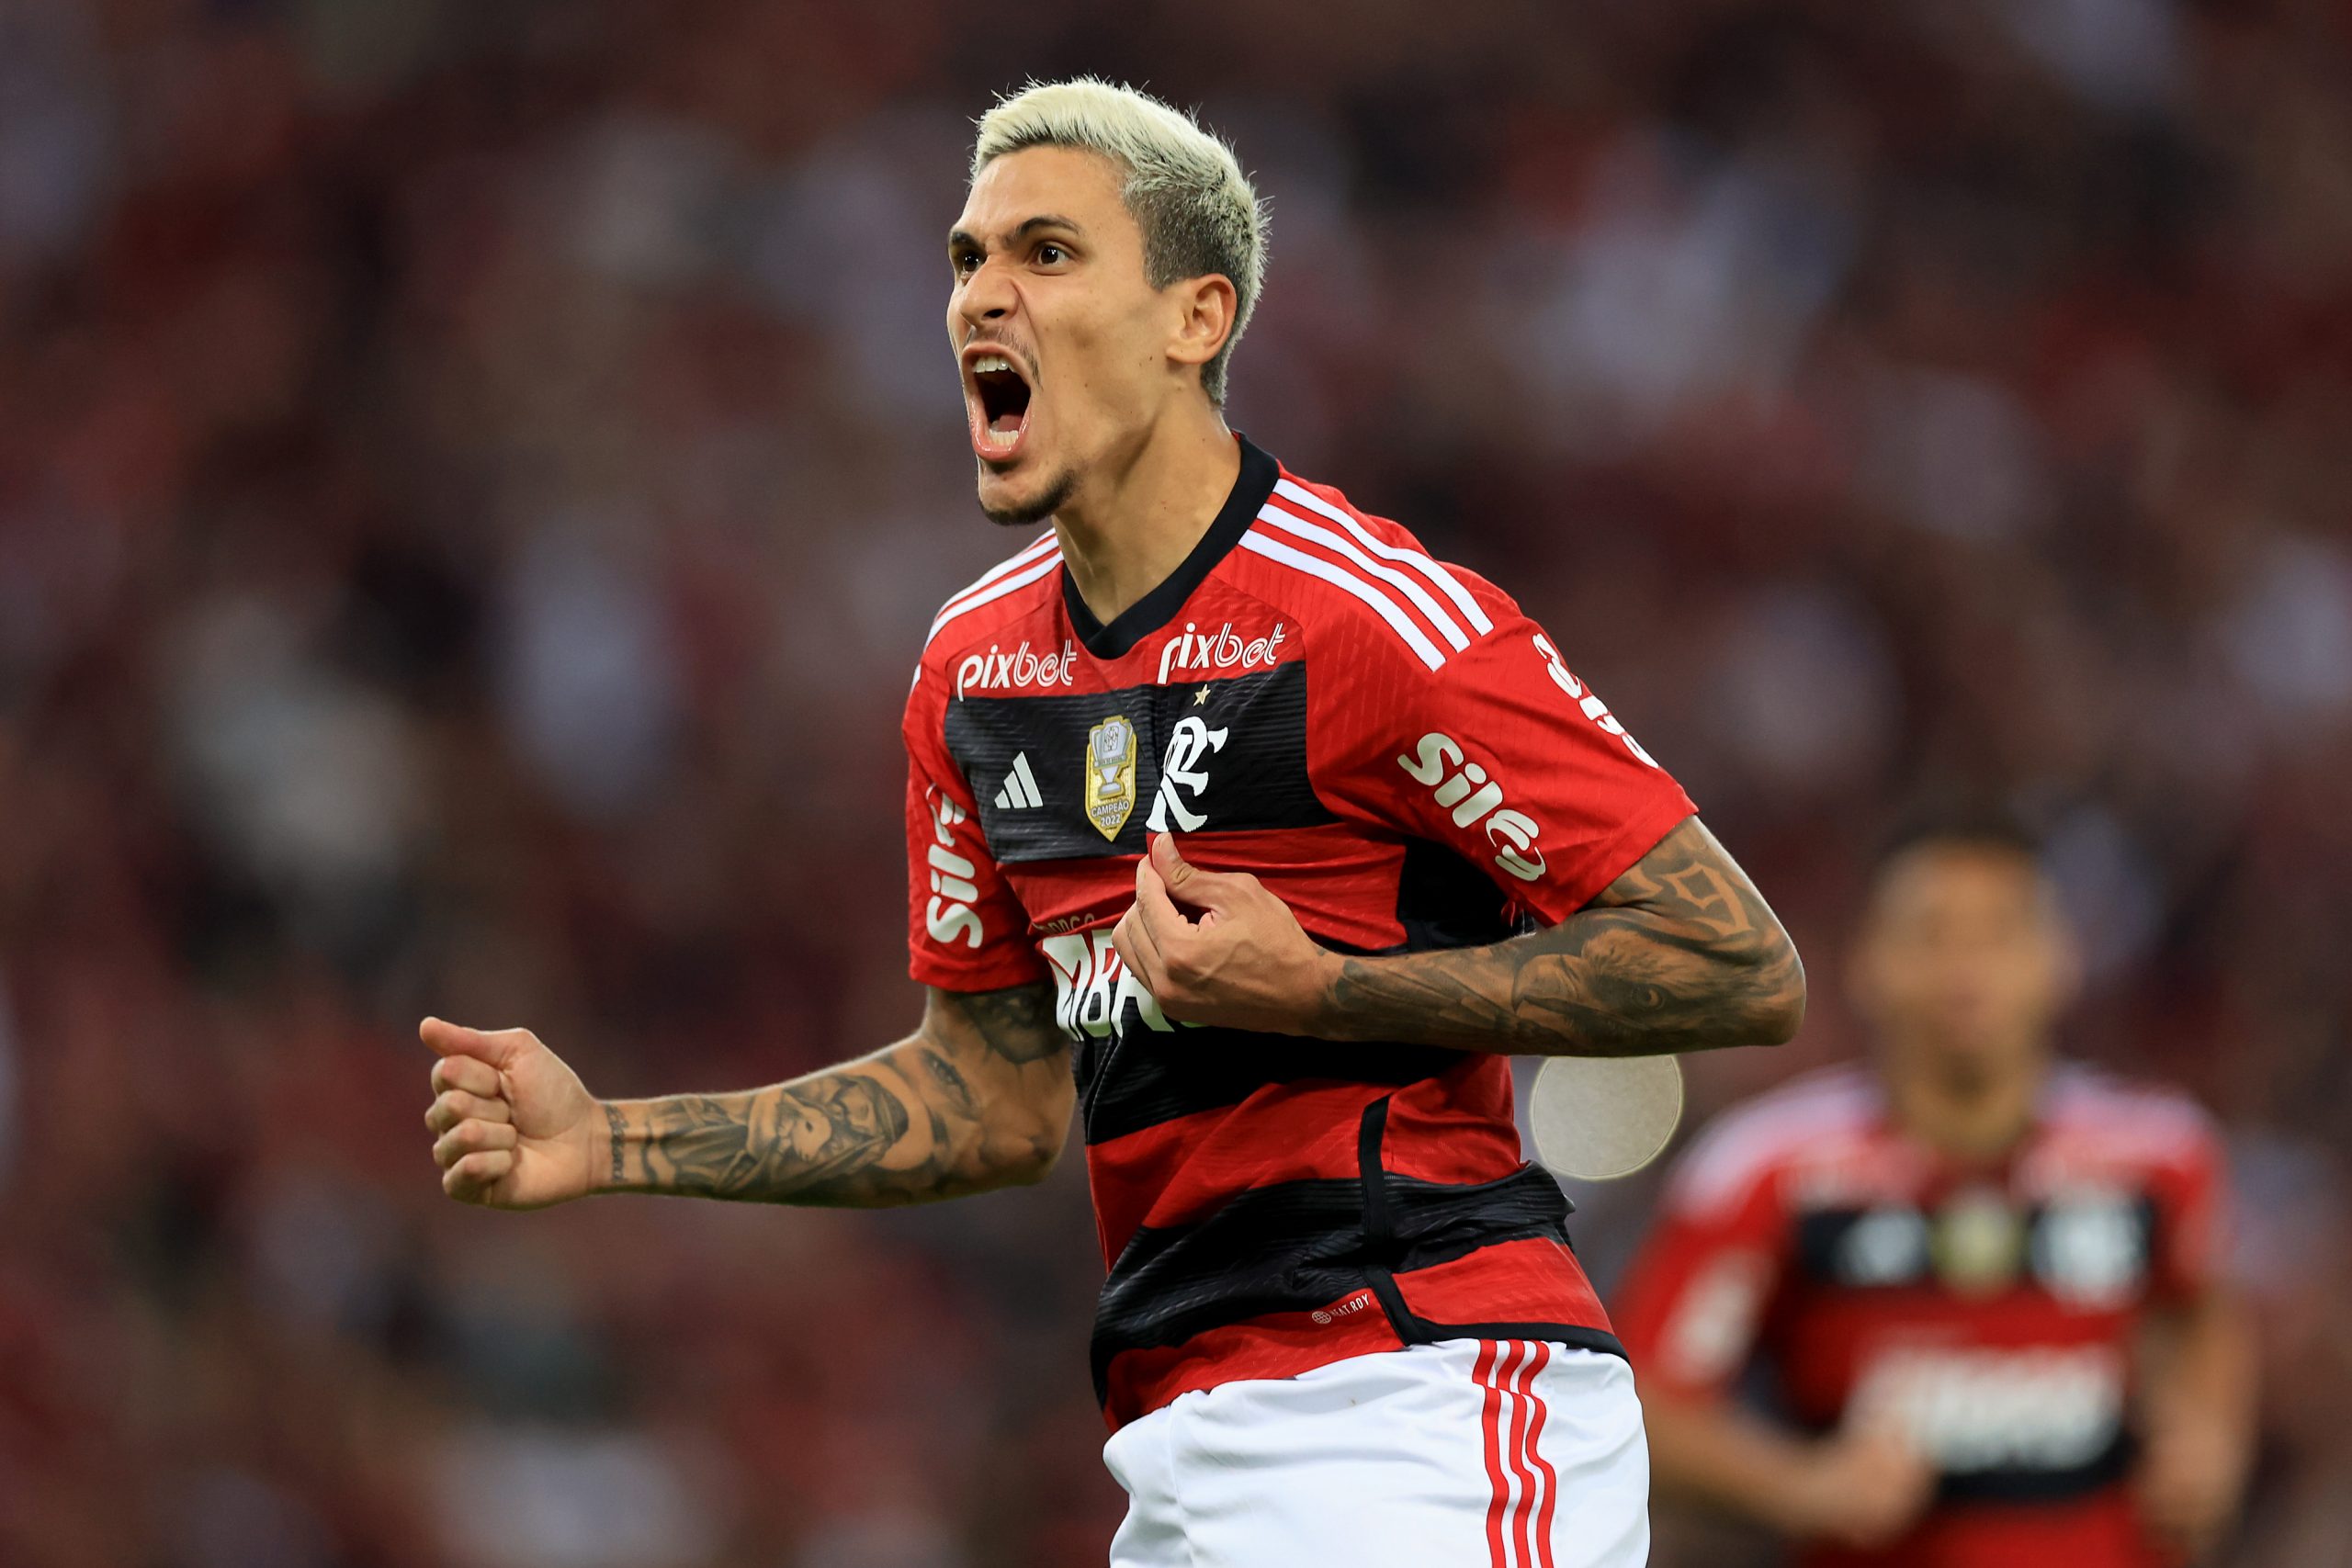 Pedro of Flamengo celebrates after scoring.